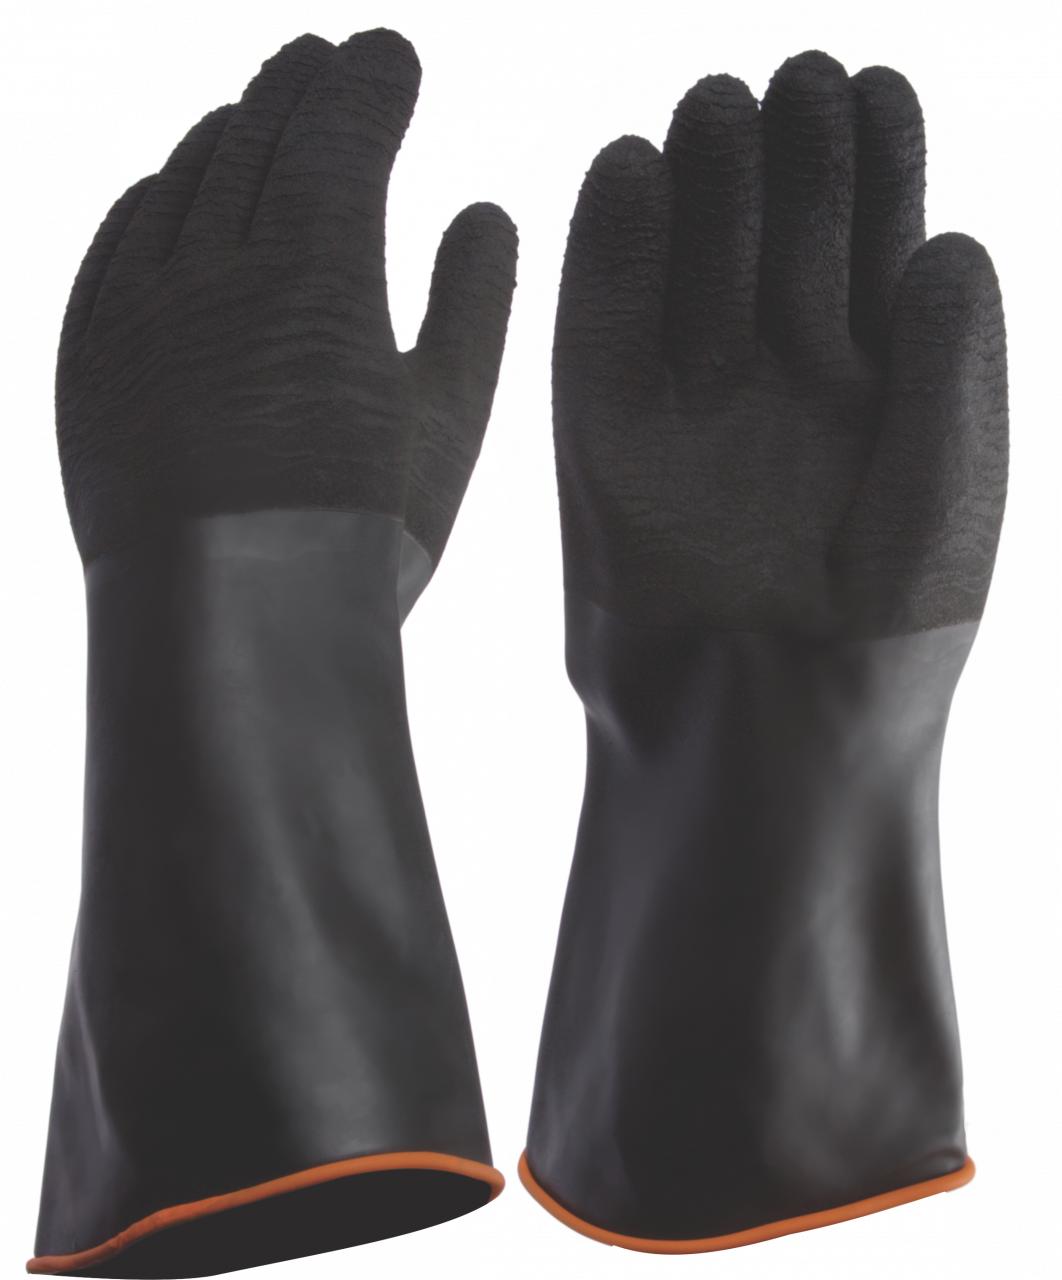 Rubber Glove Rough Black/Orange 9 inch